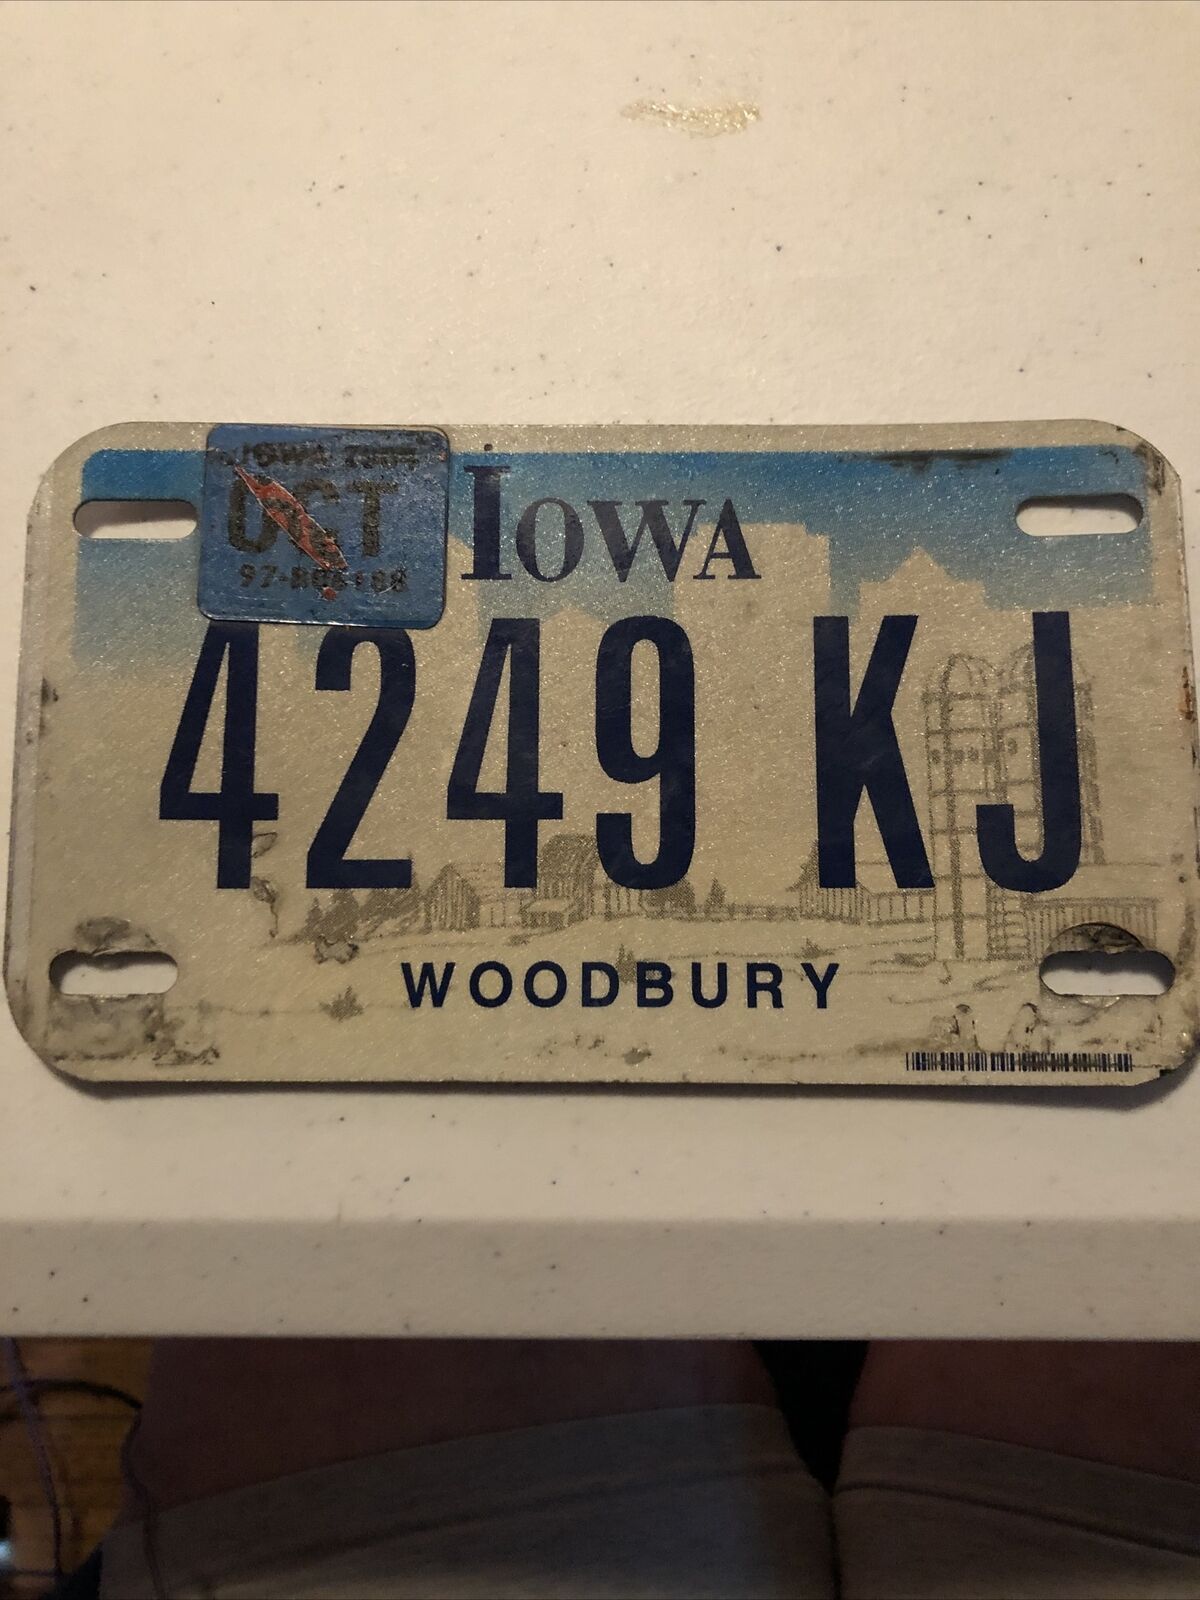 Iowa 2004 License Plate "4249 Kj” Woodbury